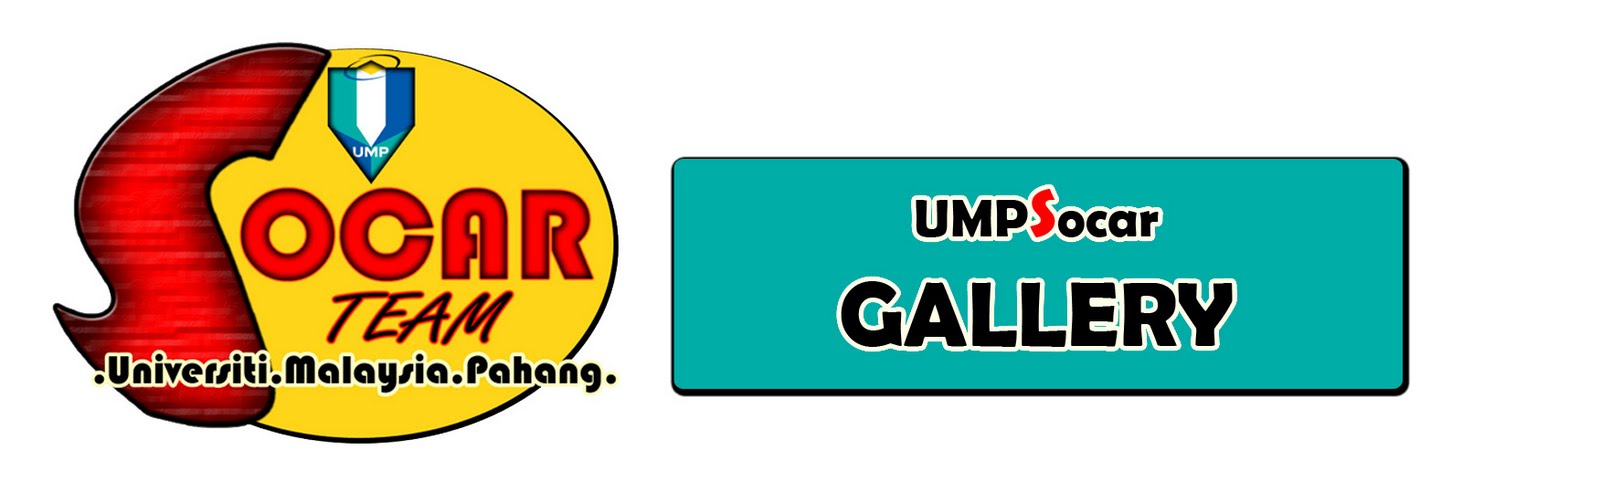 UMPSocar - Gallery